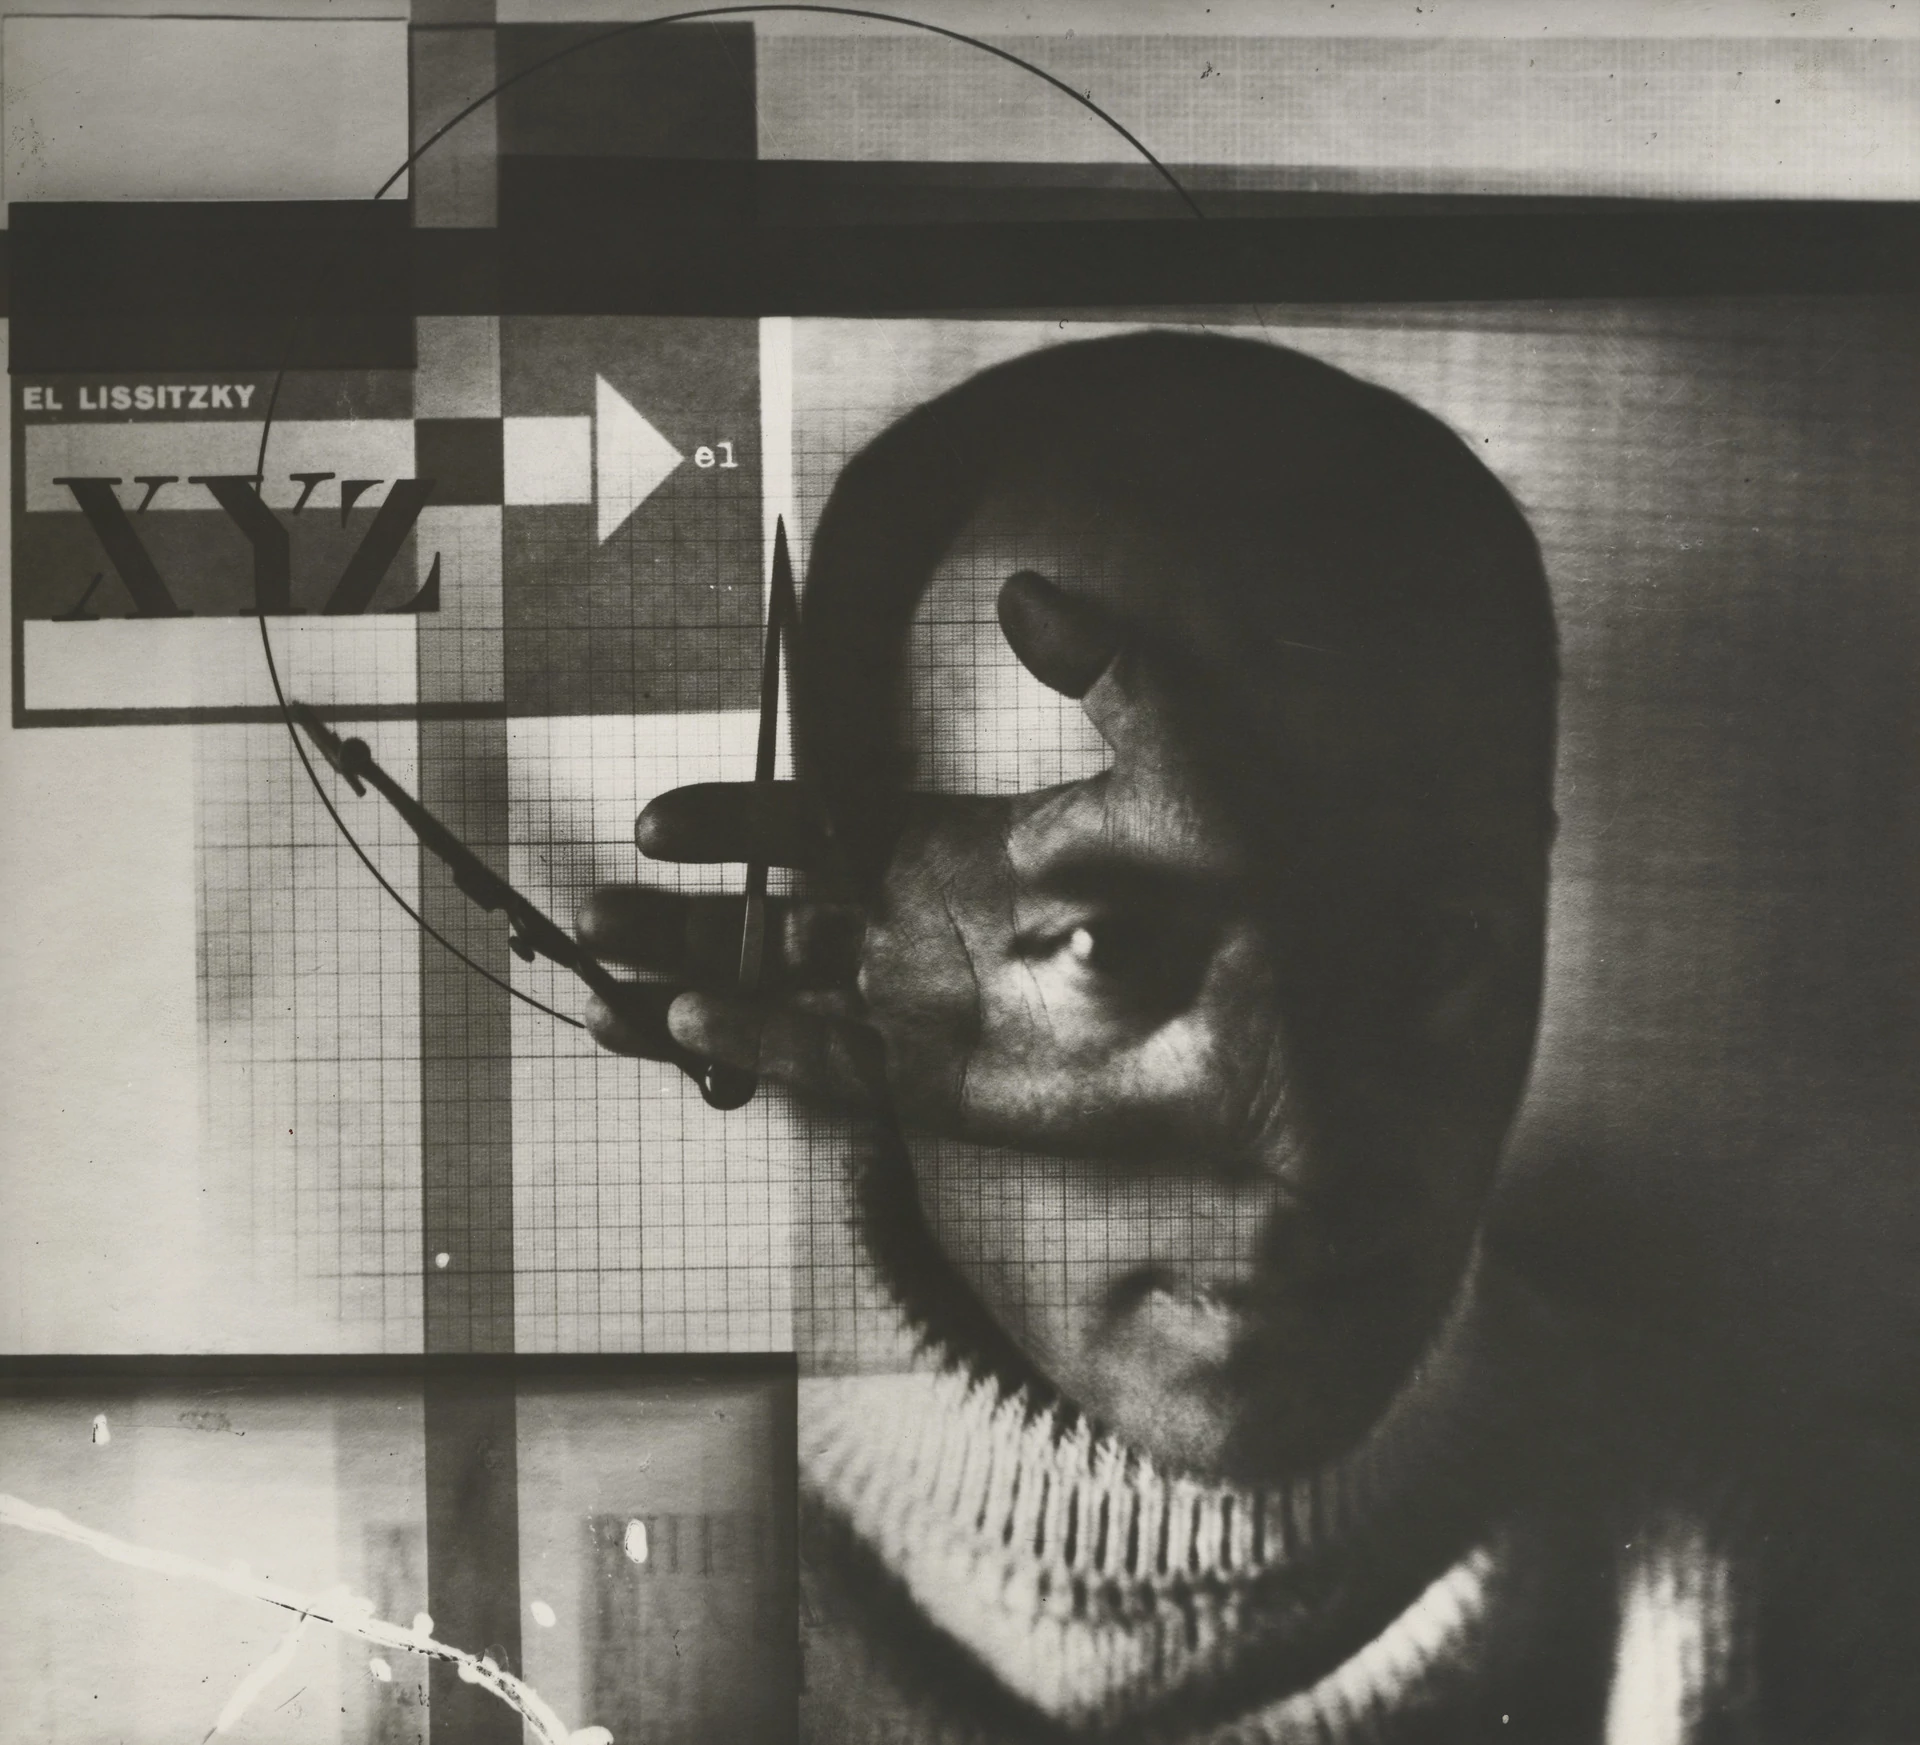 The Constructor, El Lissitzky